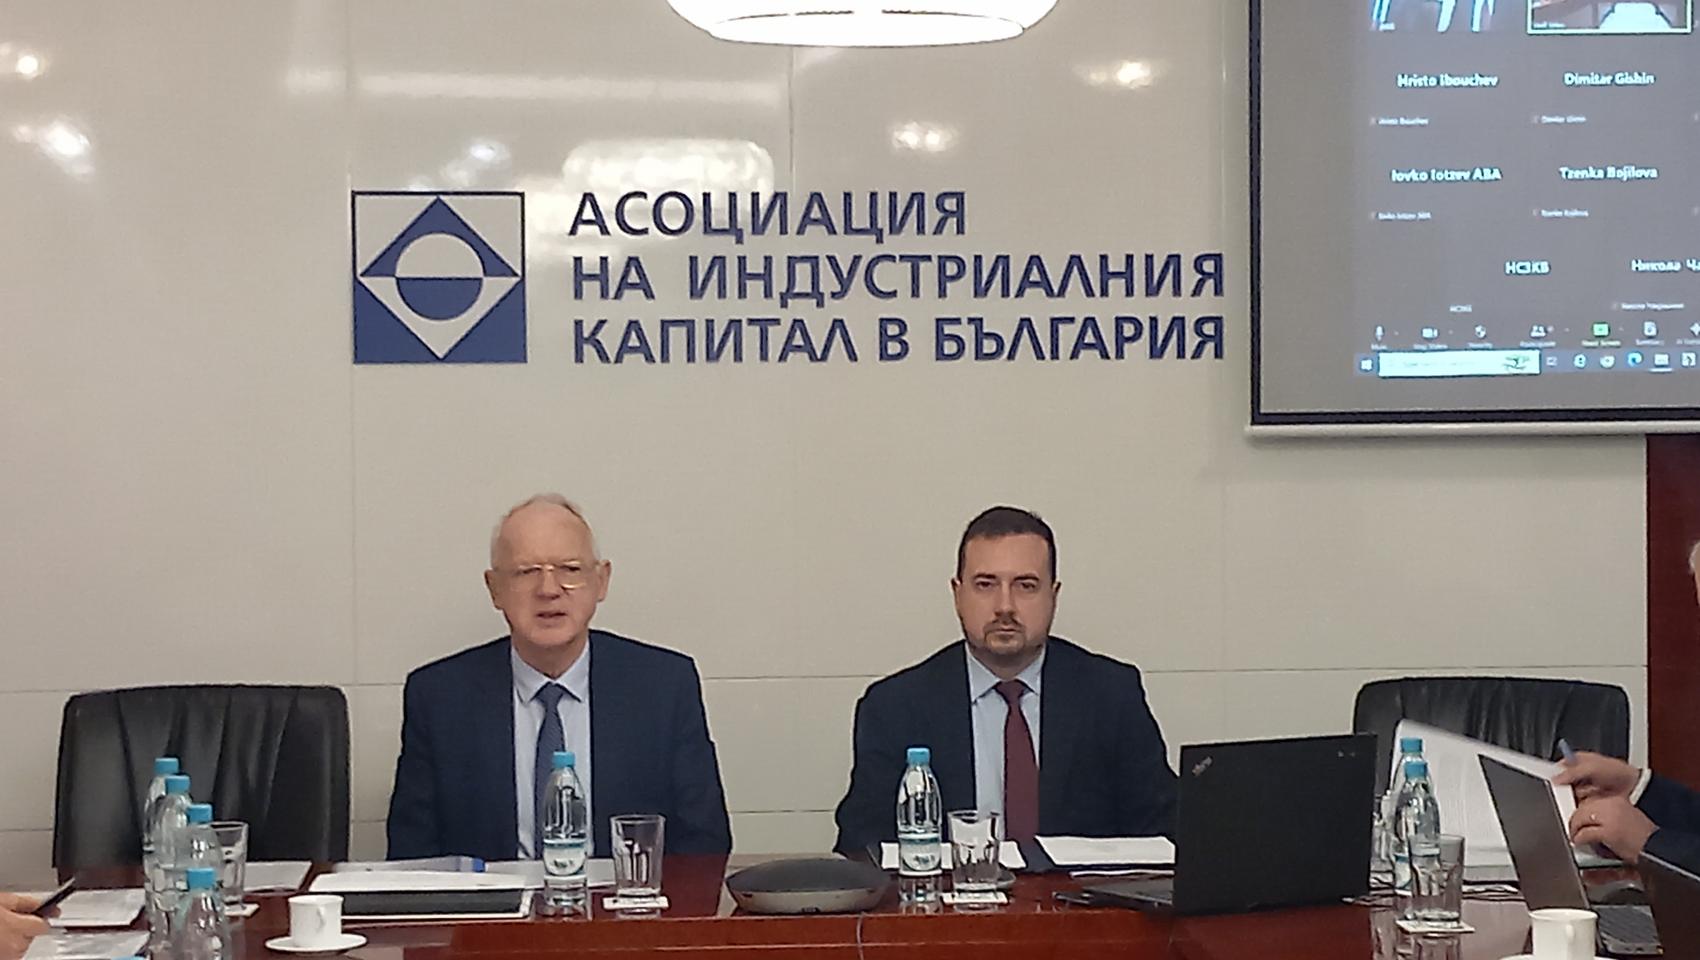 The Deputy Minister of Economy and Industry Nikolay Pavlov presented